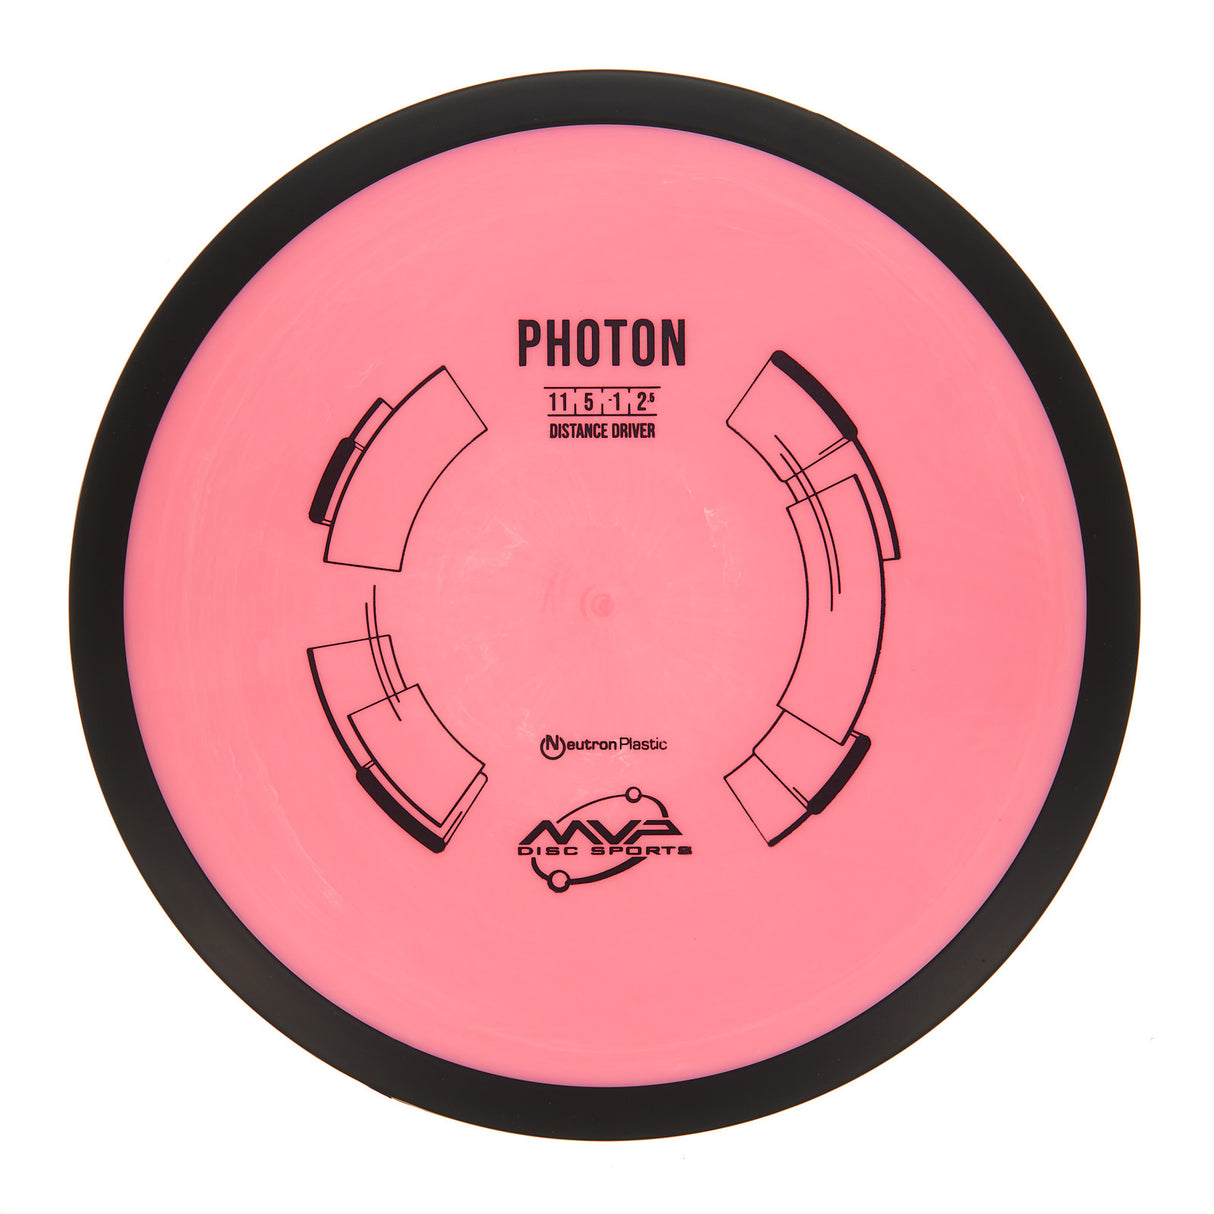 MVP Photon - Neutron 162g | Style 0001